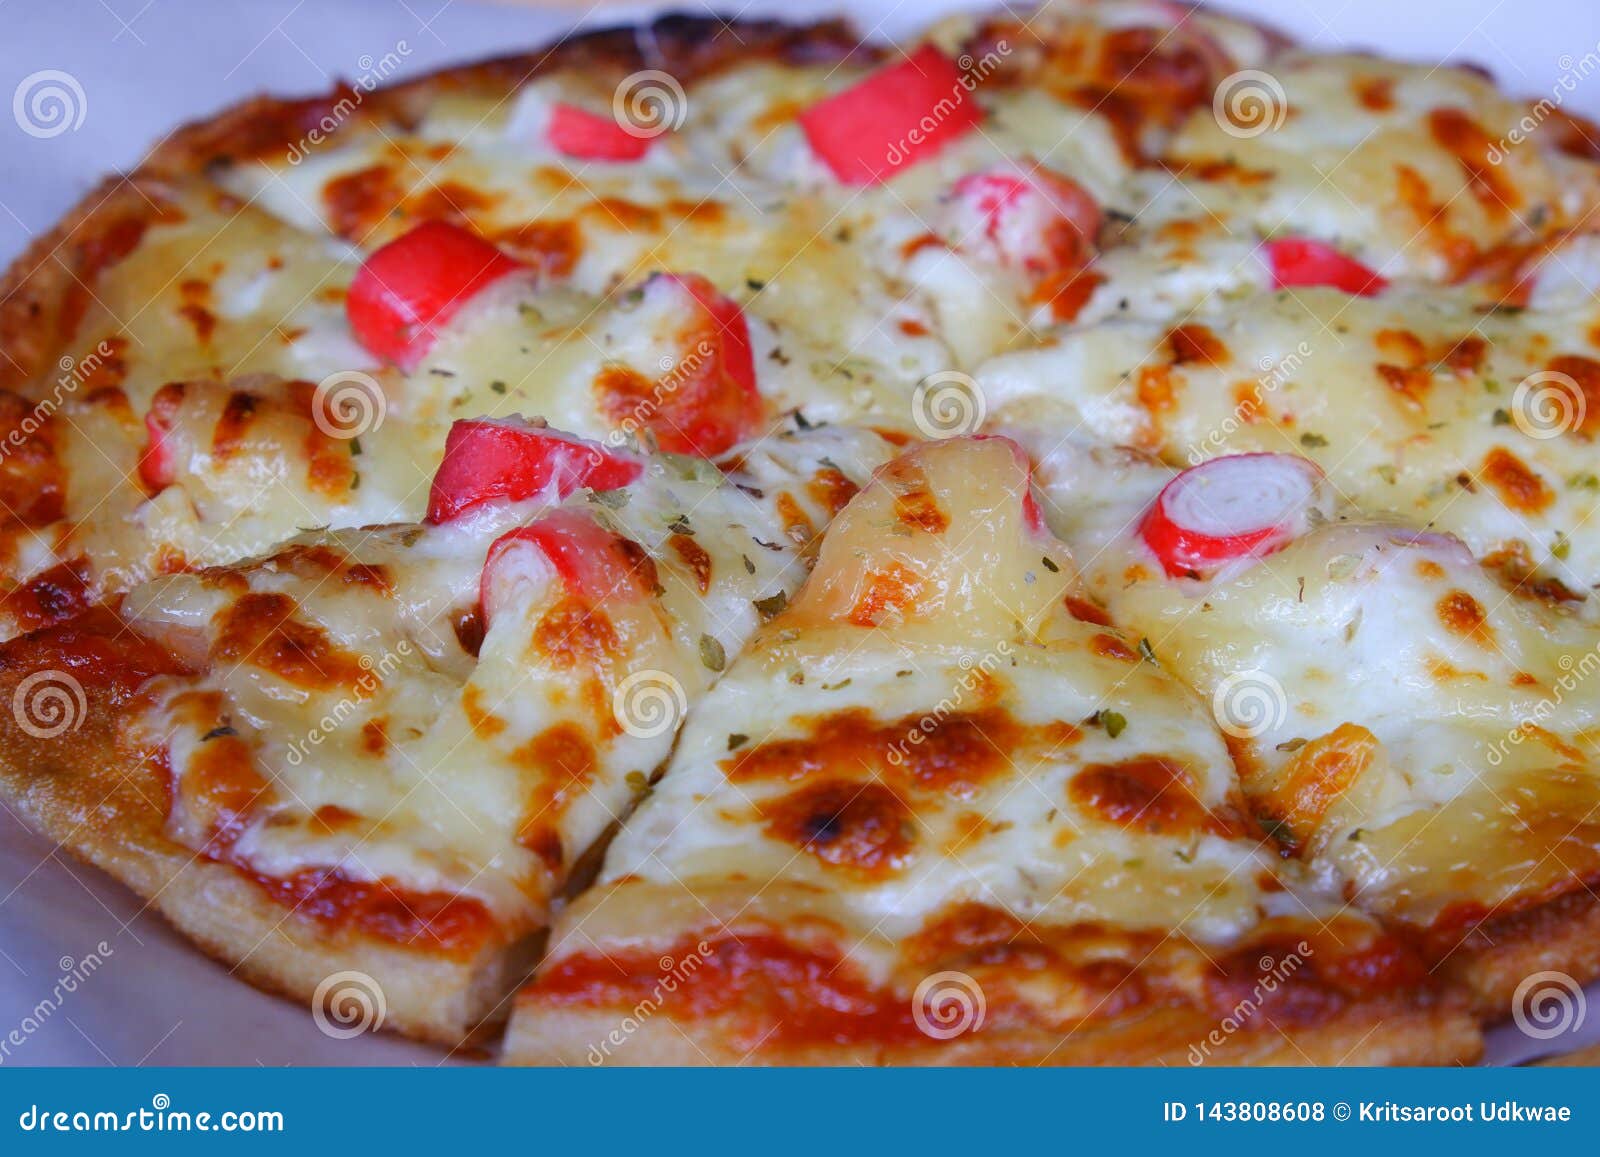 пицца с крабовыми палочками начинка (120) фото